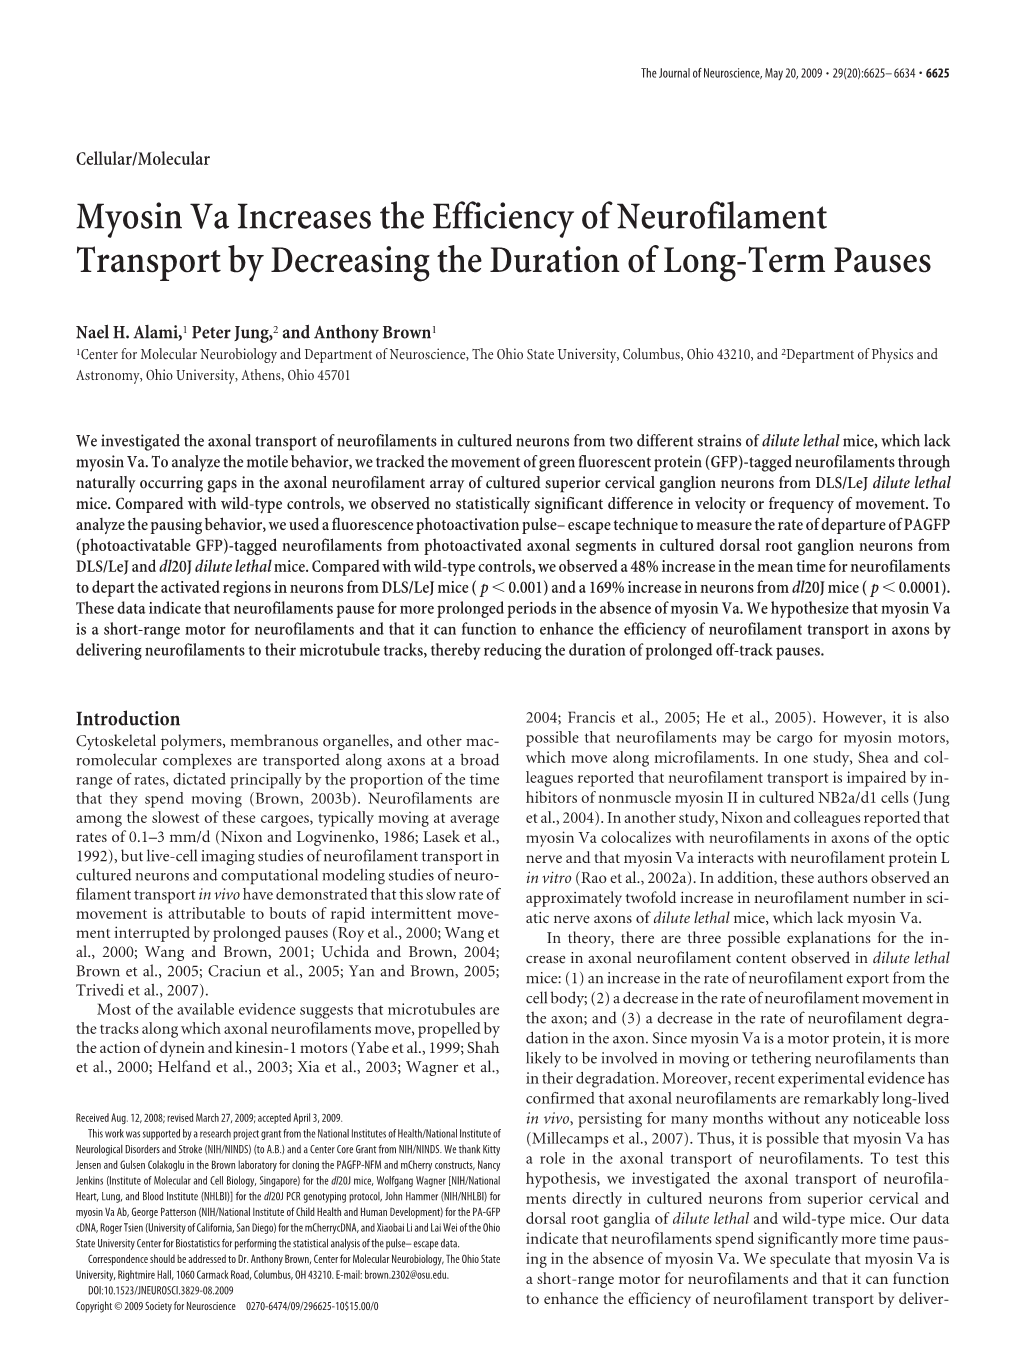 Myosin Va Increases the Efficiency of Neurofilament Transport by Decreasing the Duration of Long-Term Pauses